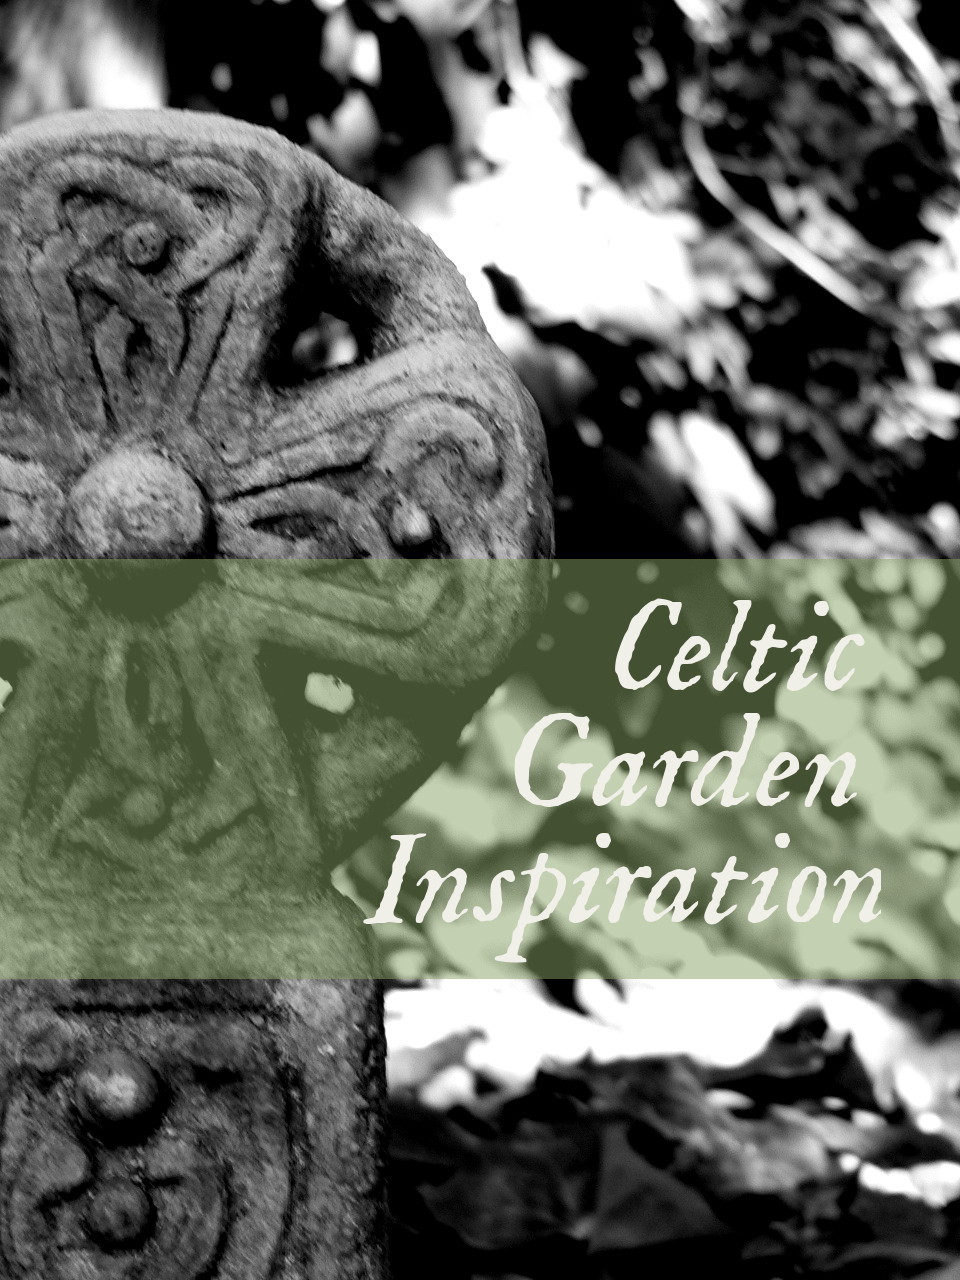 Celtic Garden Inspiration www.pithandvigor.com image by Michael Bianchi